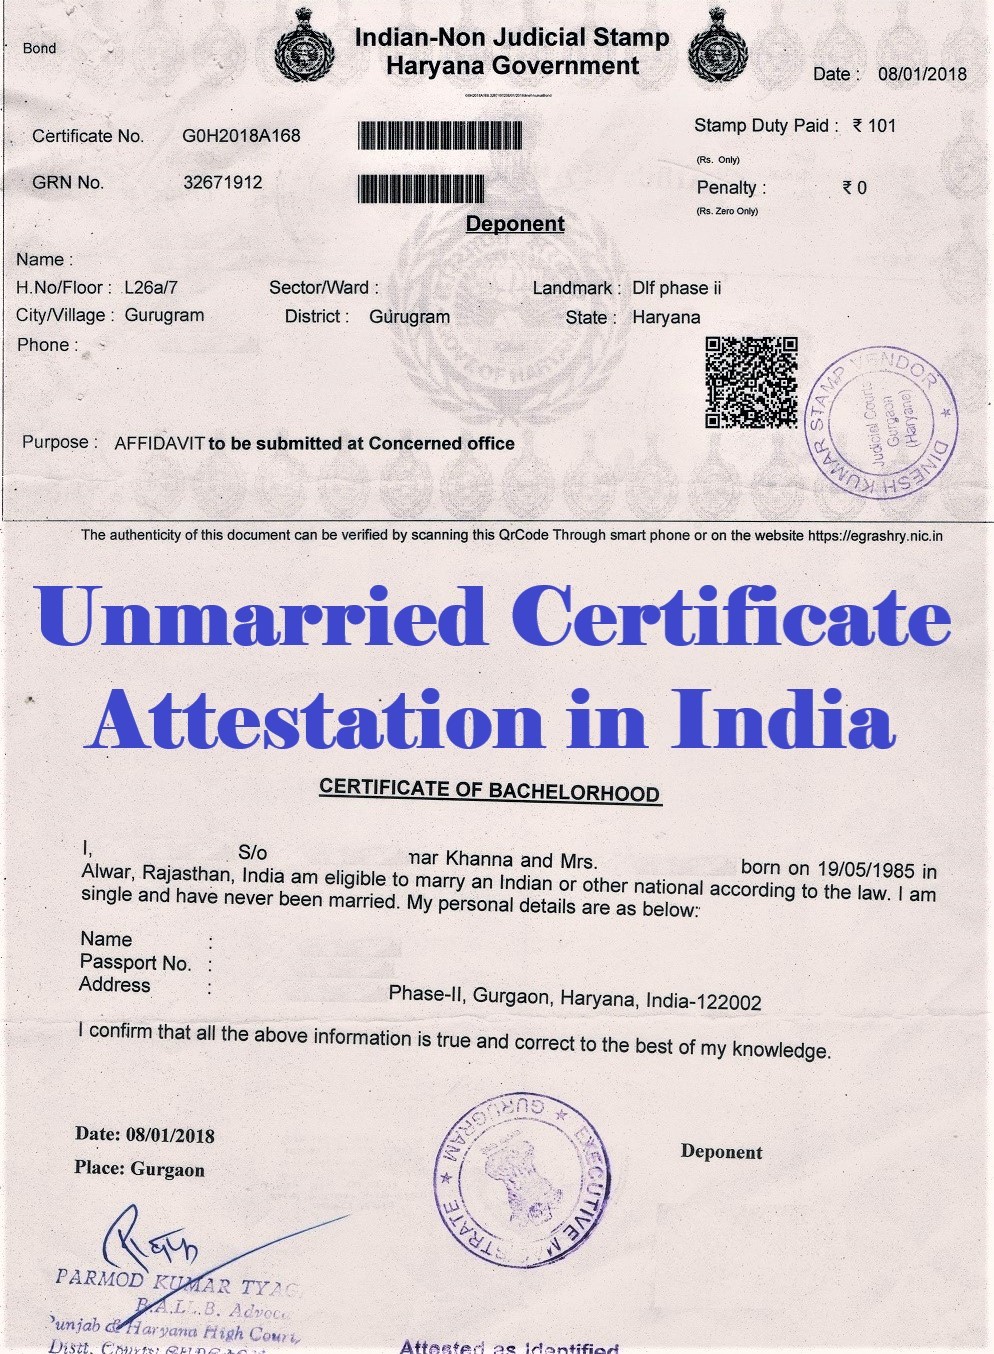 Unmarried Certificate Attestation from Grenada Embassy